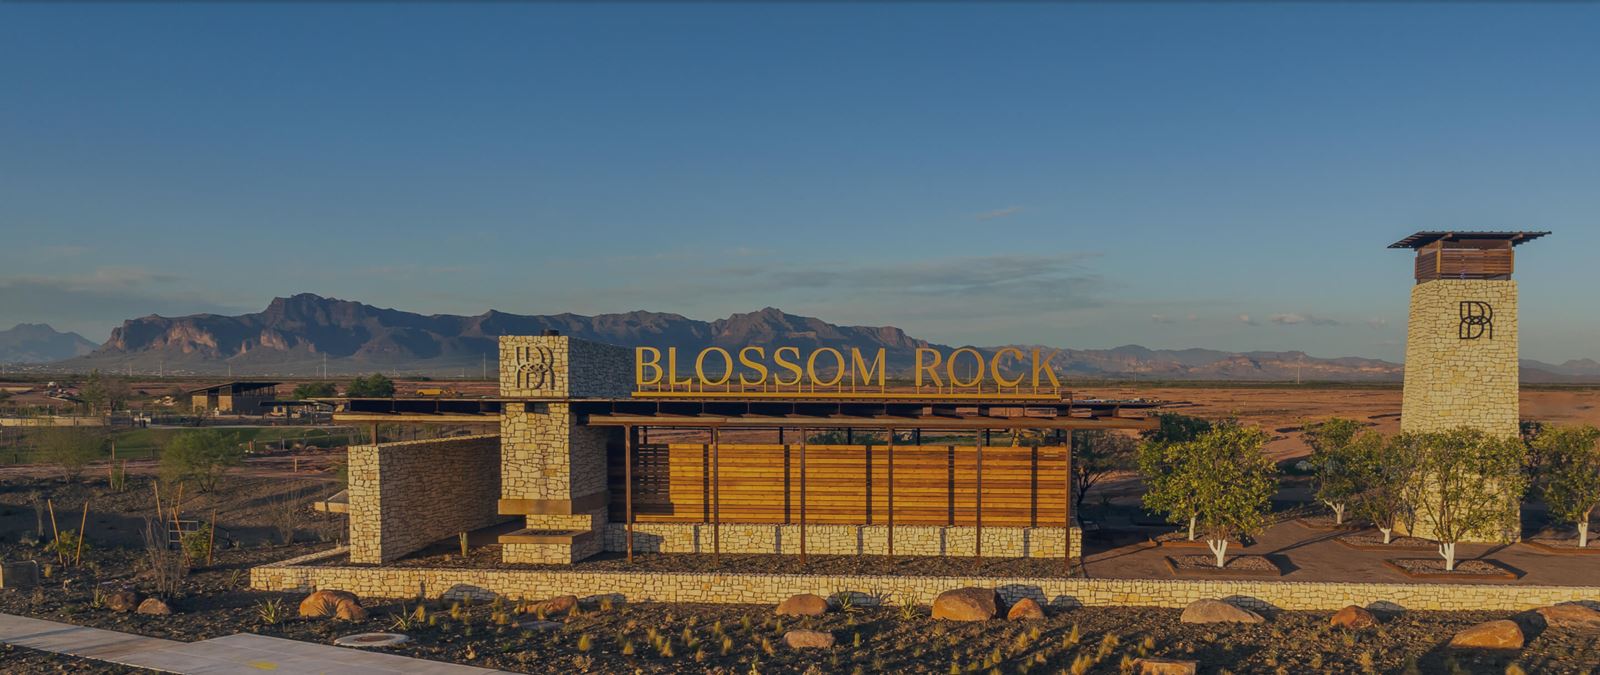 Blossom Rock Community Entrance East Valley Arizona